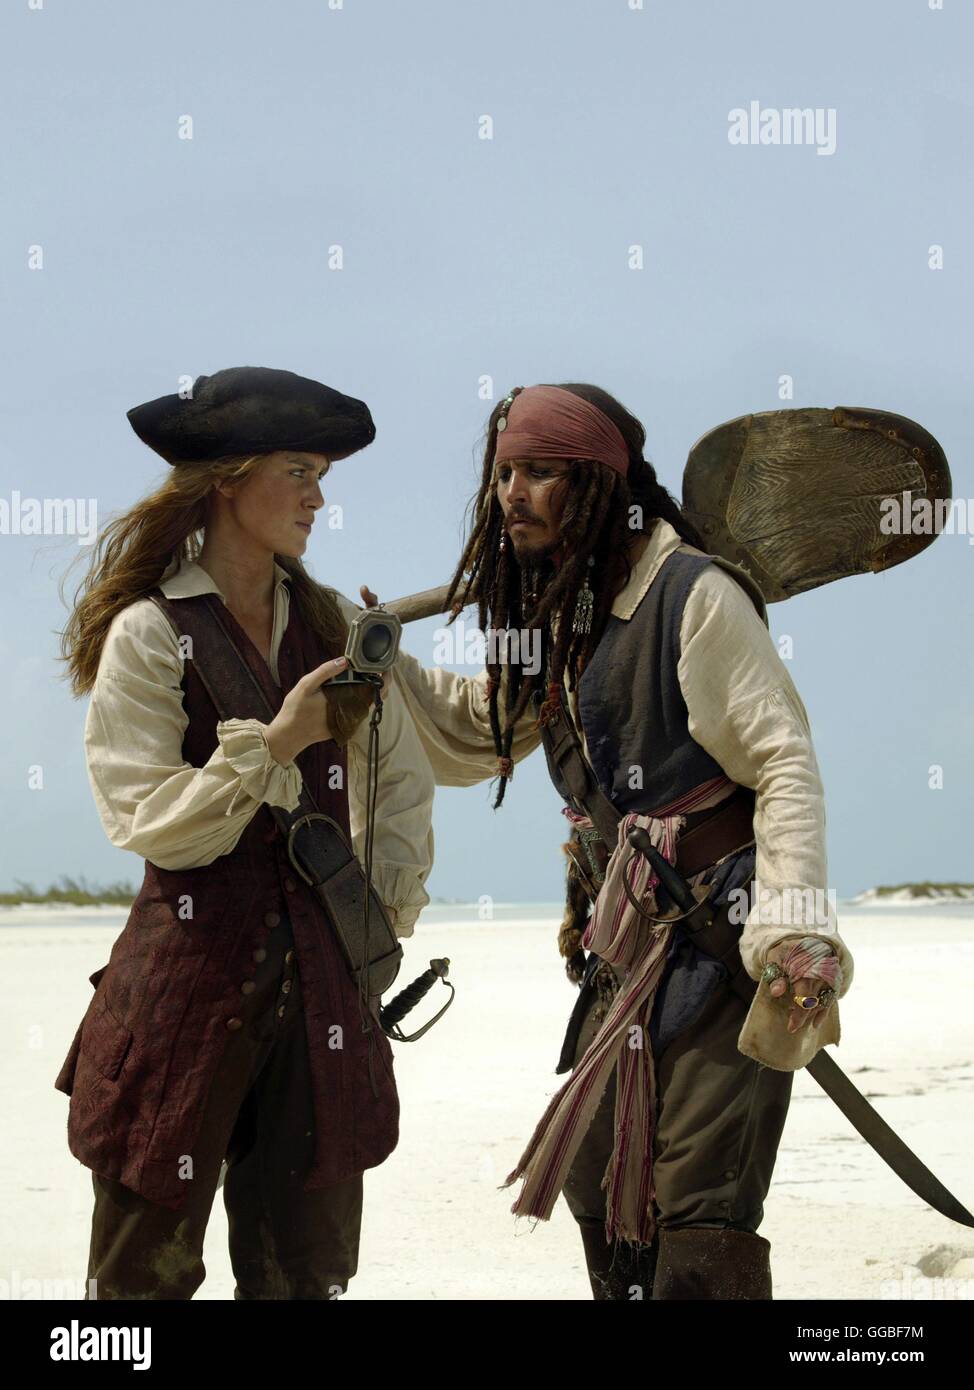 PIRATES OF THE CARIBBEAN - FLUCH DER KARIBIK 2 / Pirates of the Caribbean -  Dead Man's Chest USA 2006 / Gore Verbinski Elizabeth Swann (KEIRA  KNIGHTLEY) and Captain Jack Sparrow (JOHNNY